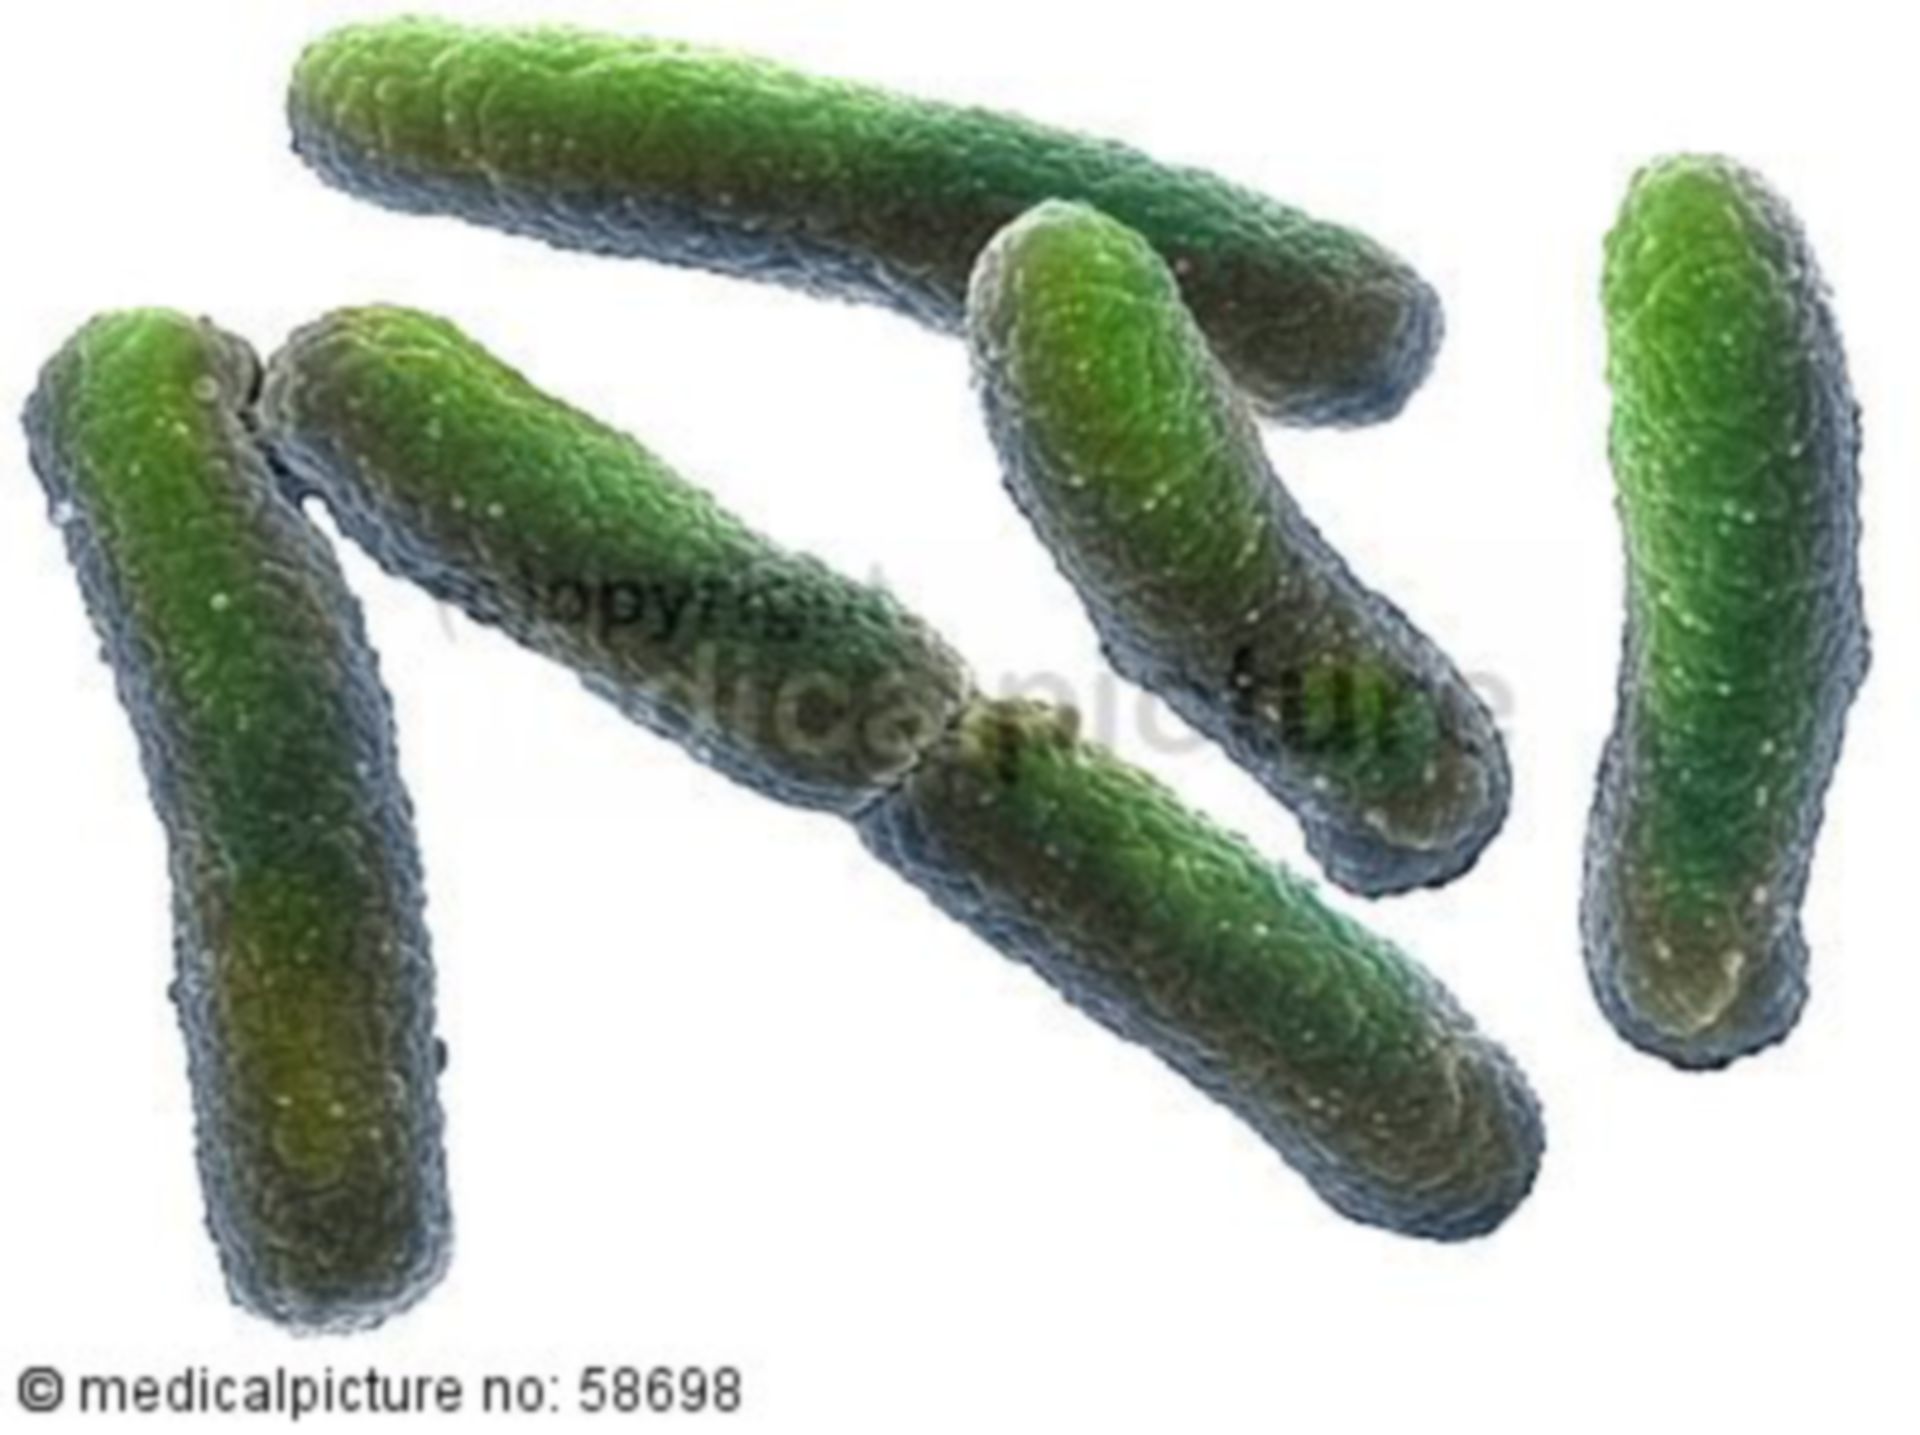  NDM 1-Bakterium 
